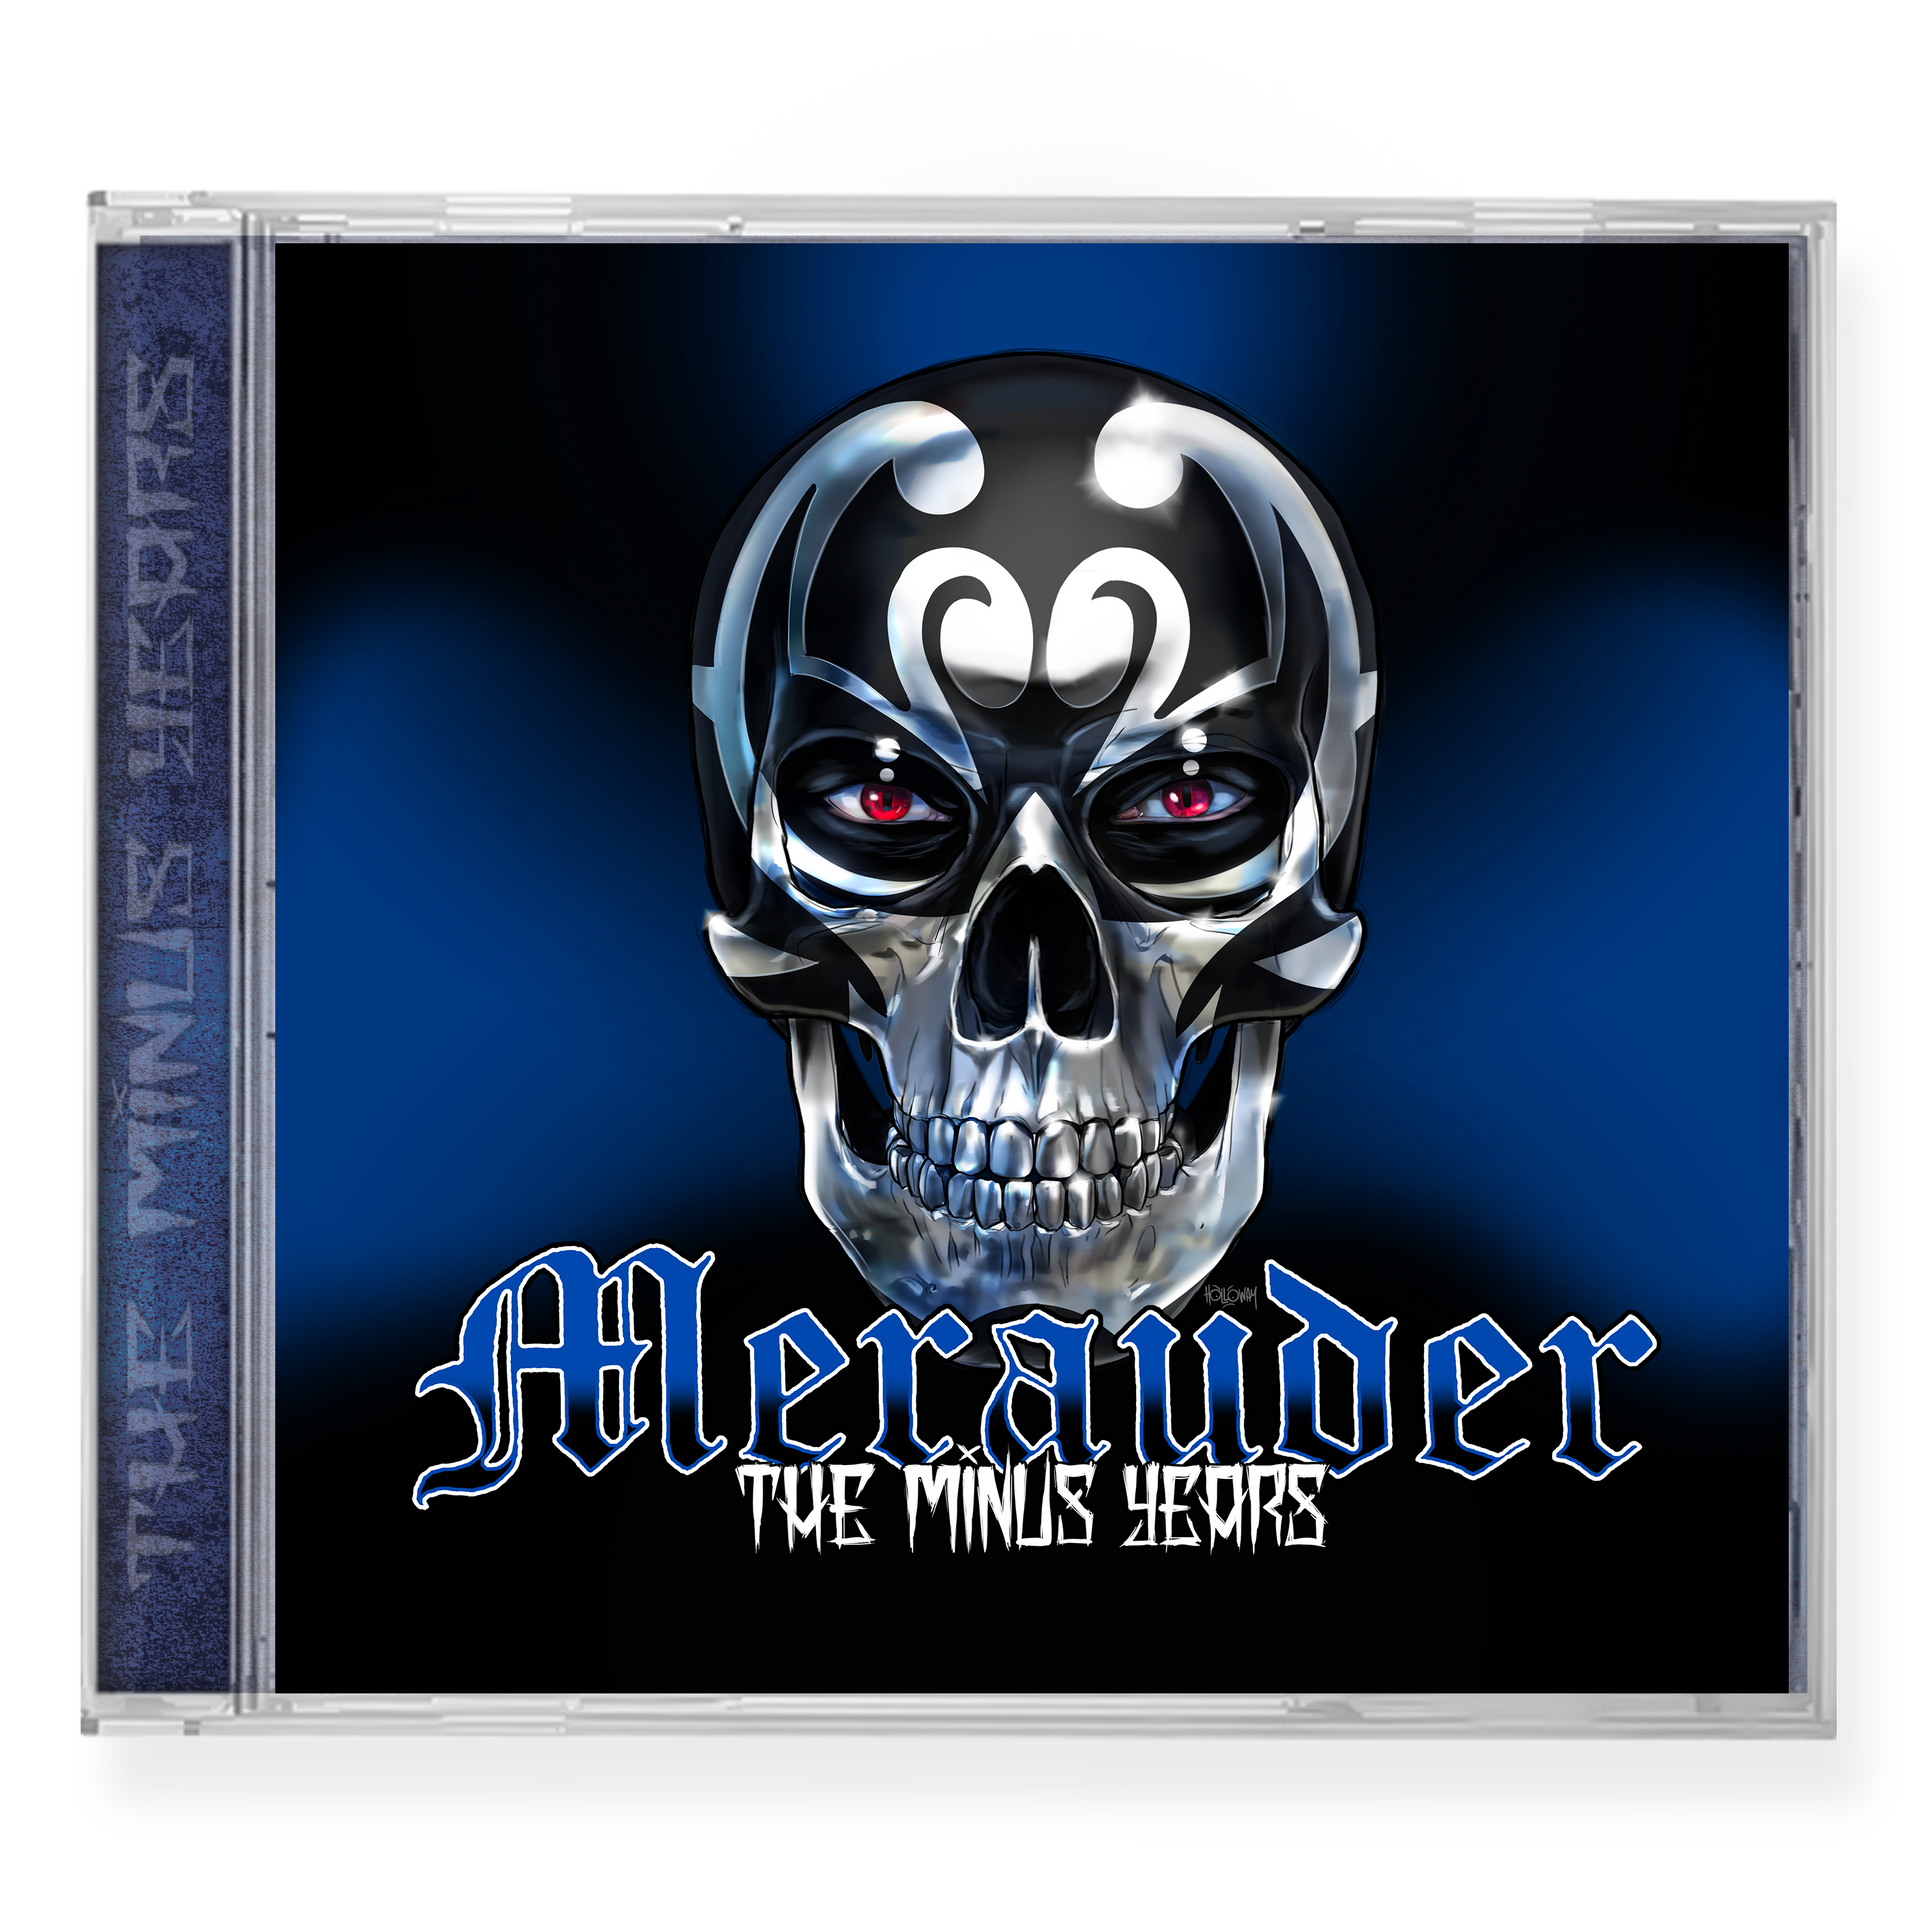 Buy – Merauder "The Minus Years" CD – Band & Music Merch – Cold Cuts Merch